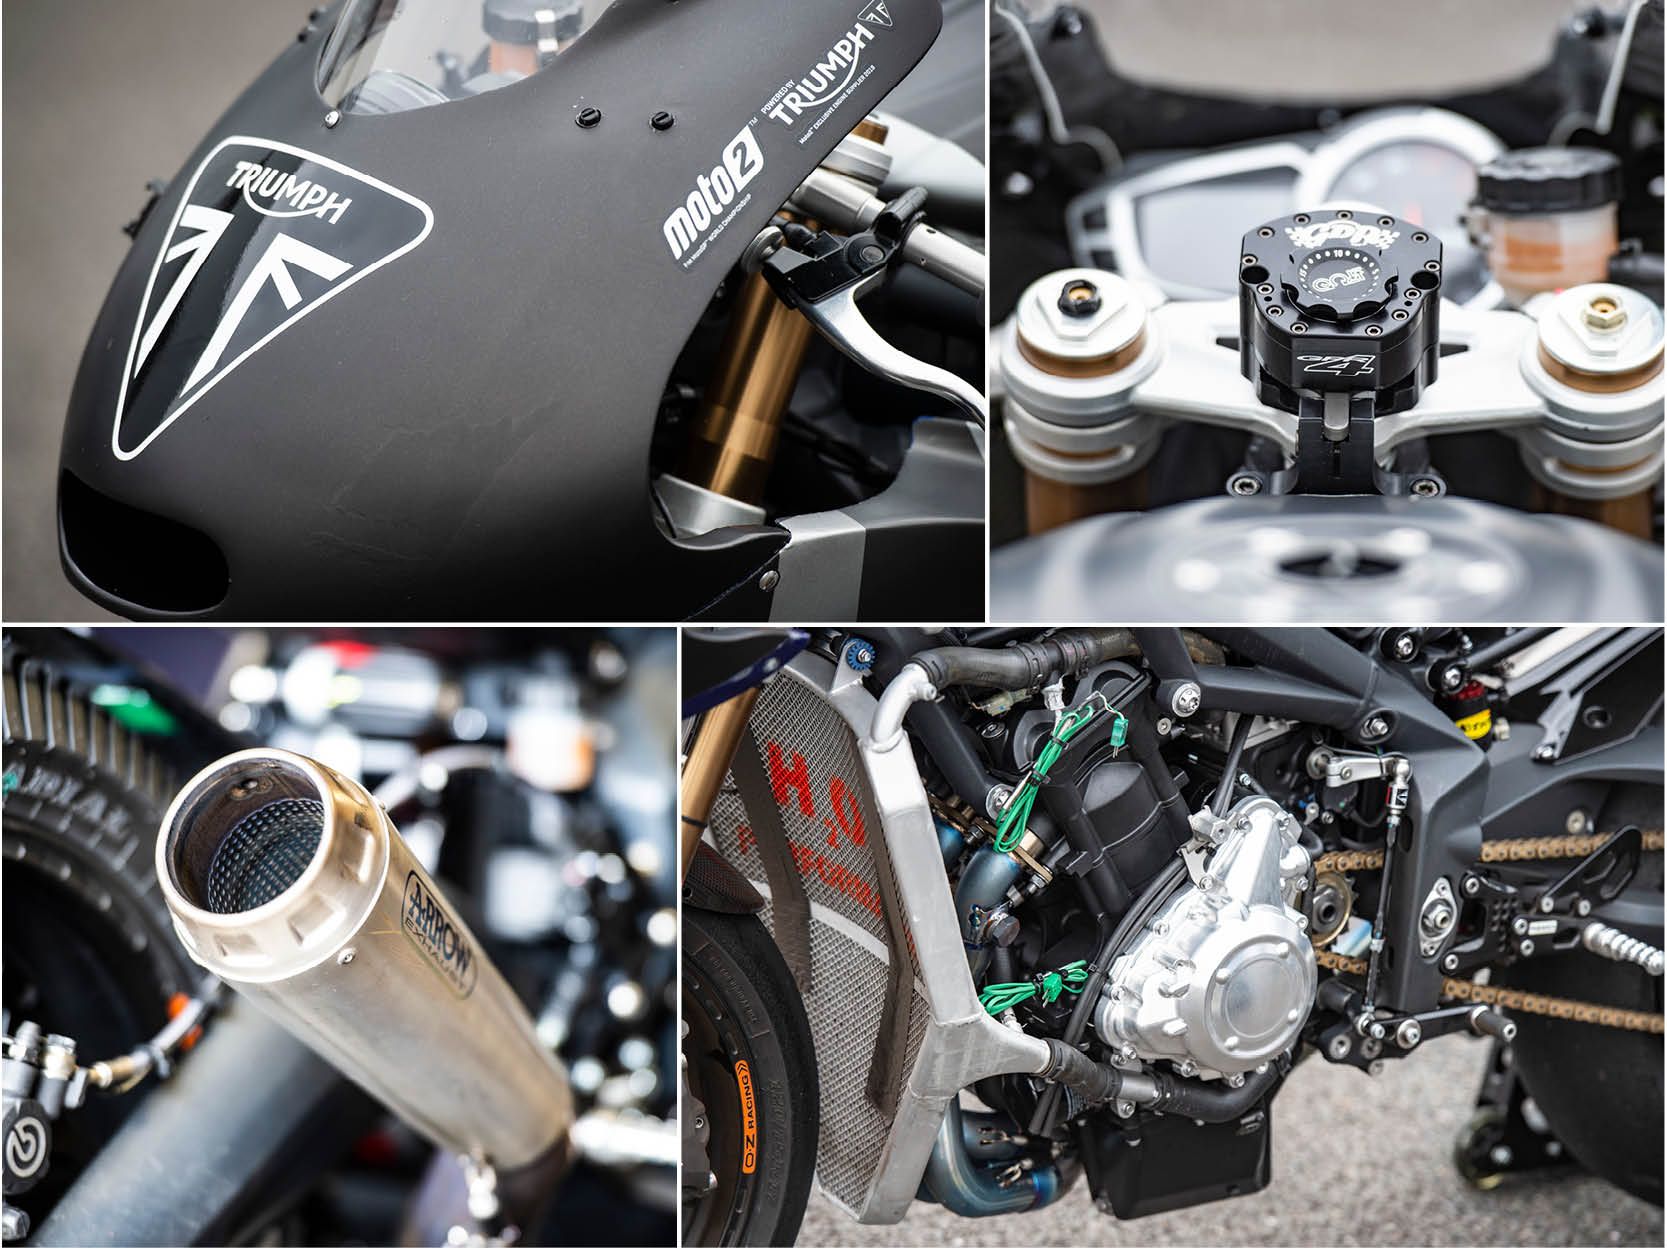 Detailed Images of Triumph Moto2 765 Race Bike